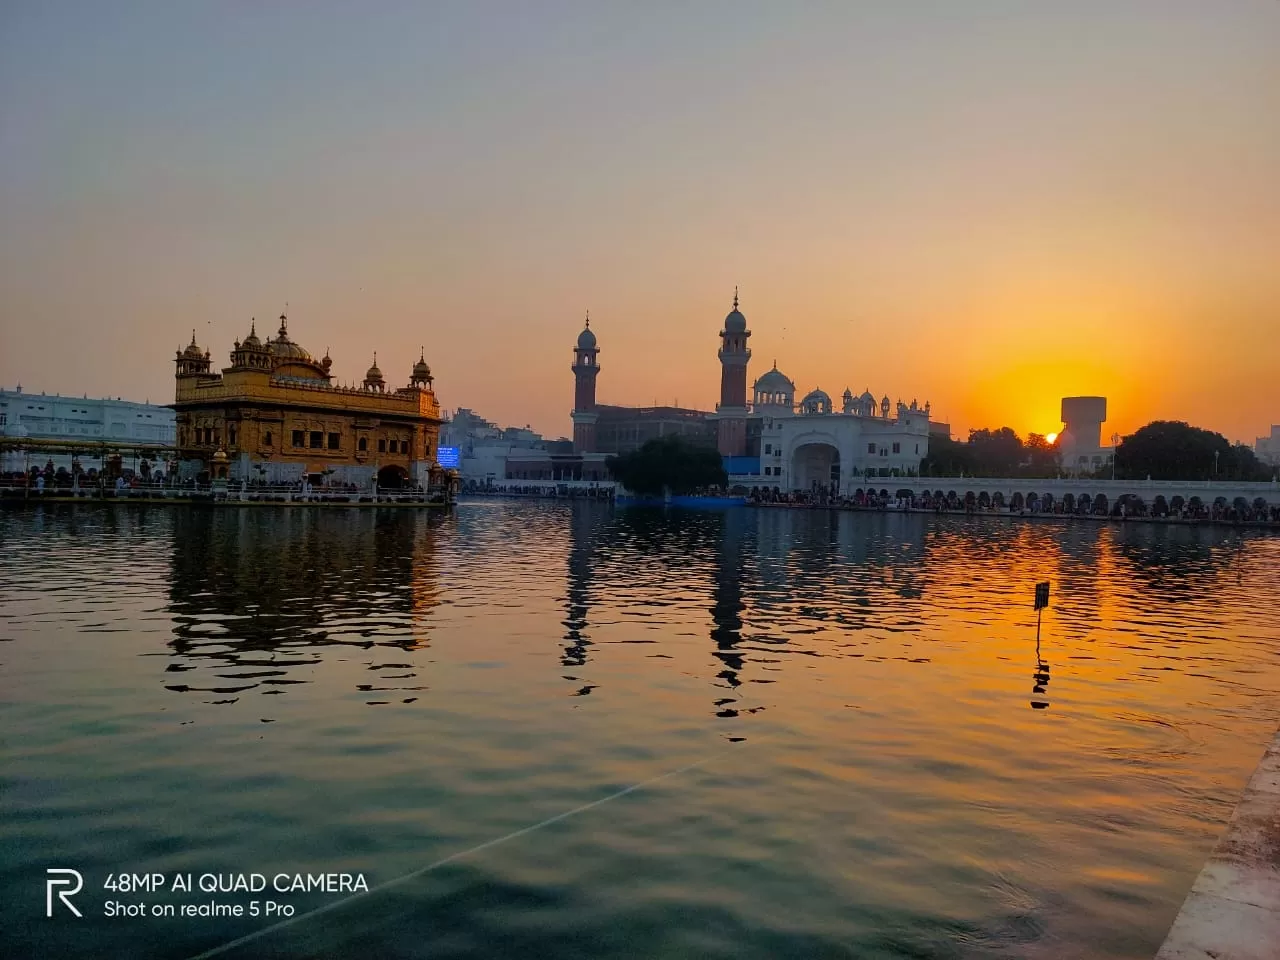 Photo of Amritsar By Vikas Yadav